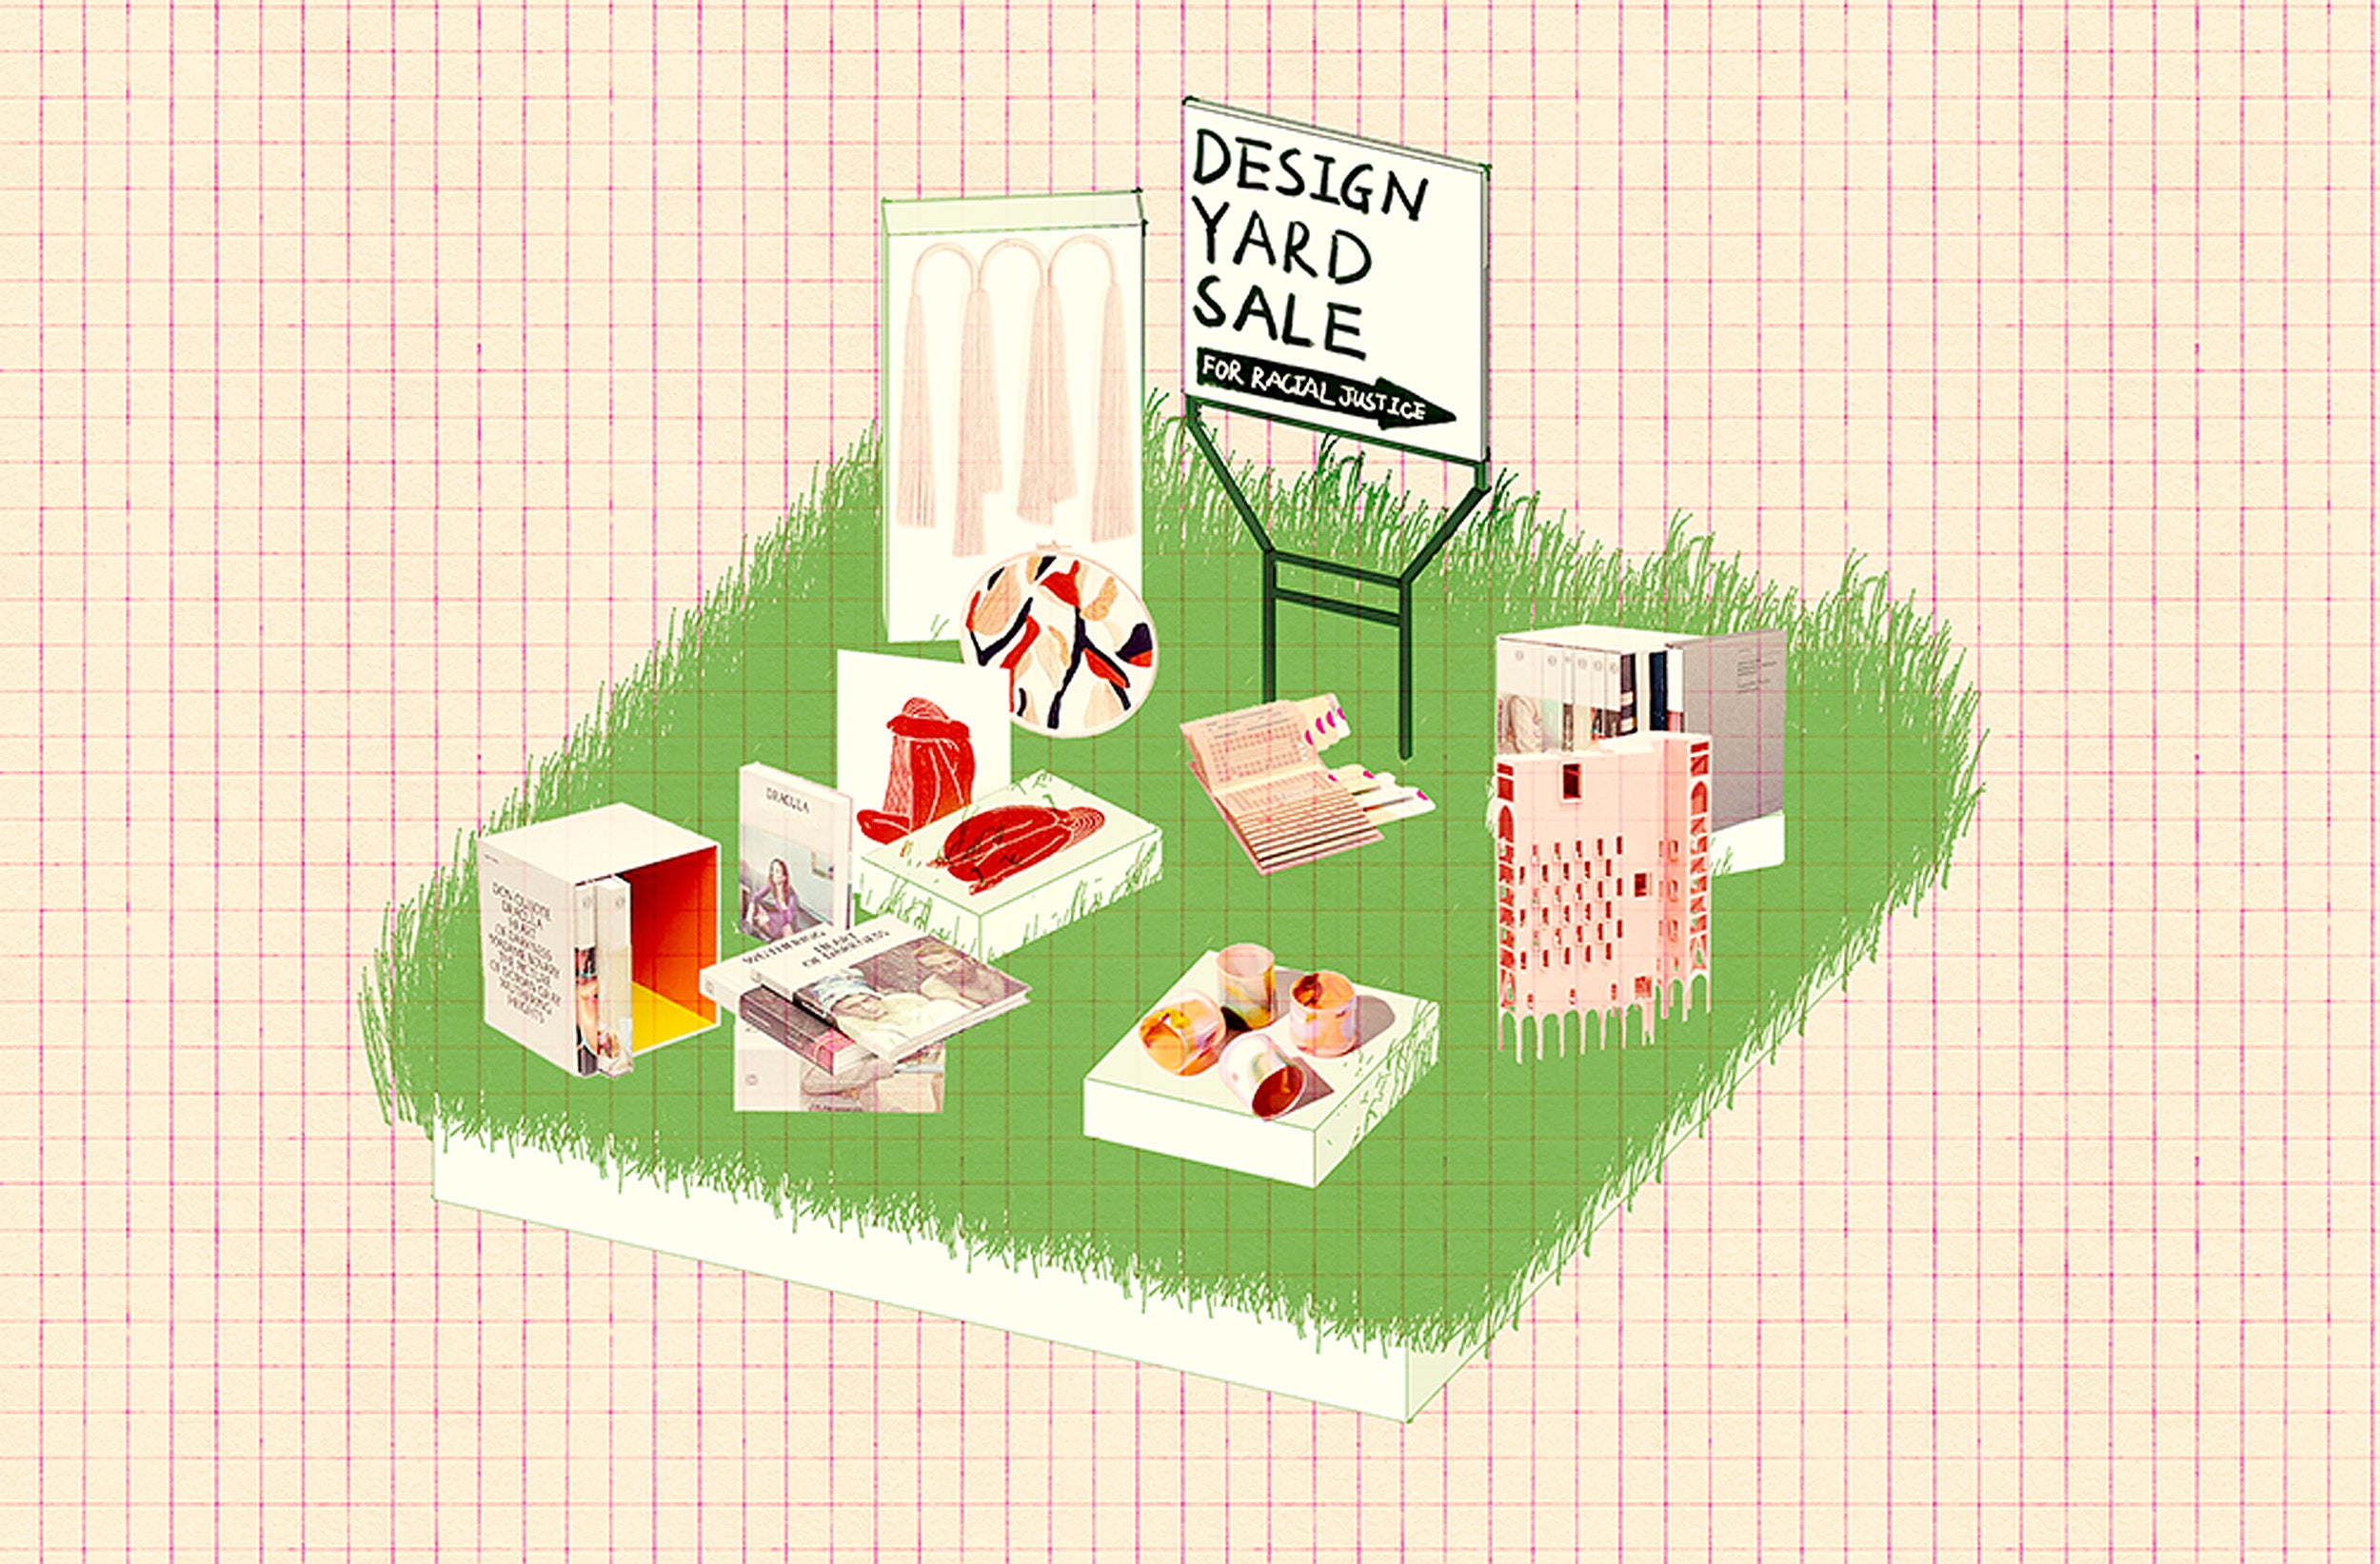 Design Yard Sale logo.